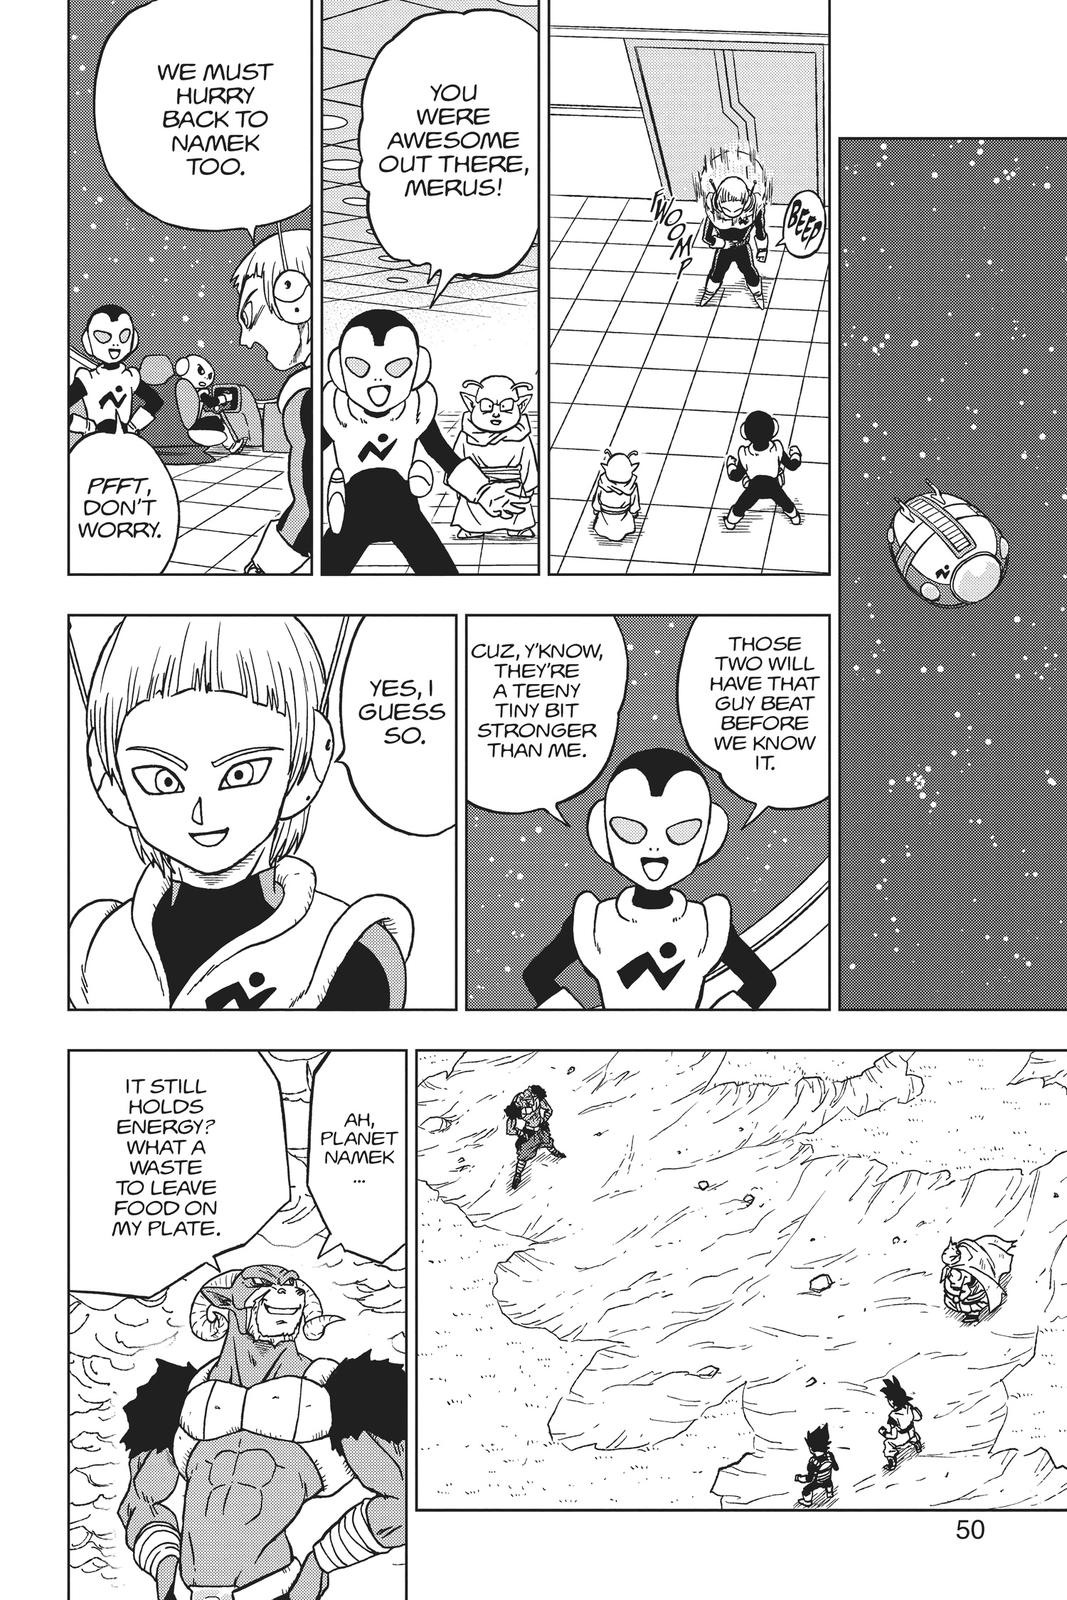  Dragon Ball Super, Chapter 49 image 51